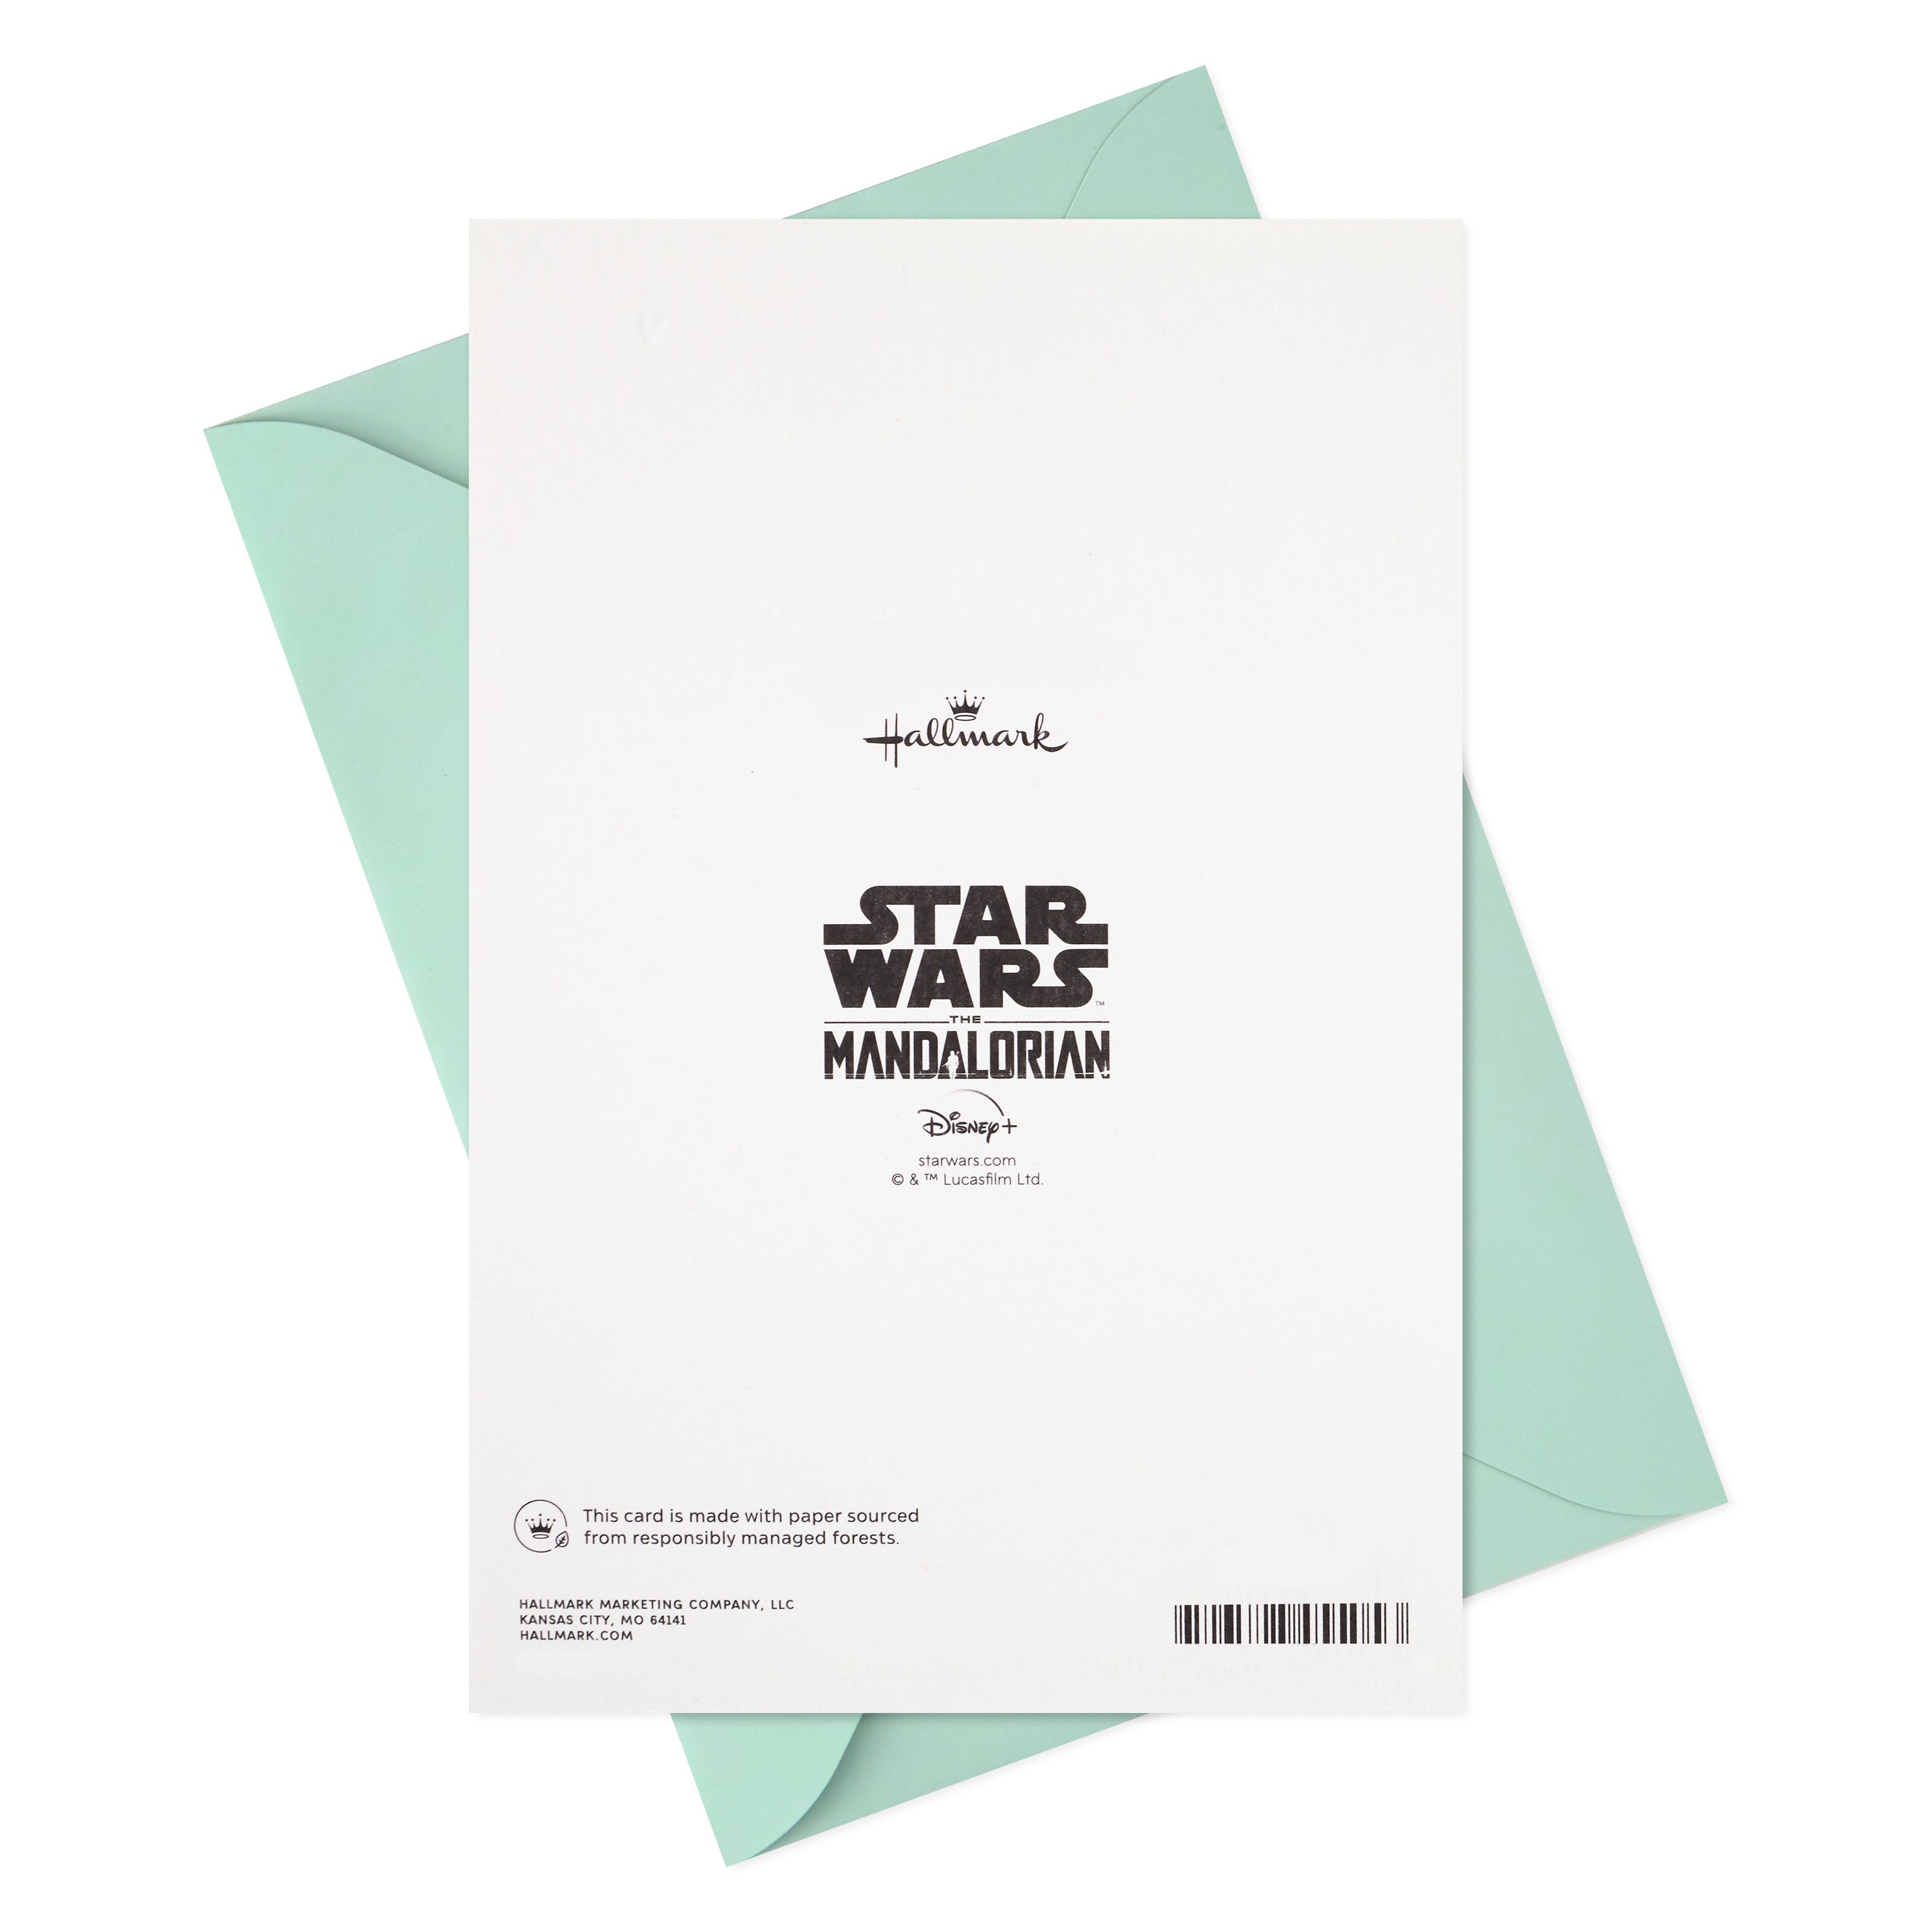 Hallmark Baby Shower Card (Baby Yoda, Force is Strong)